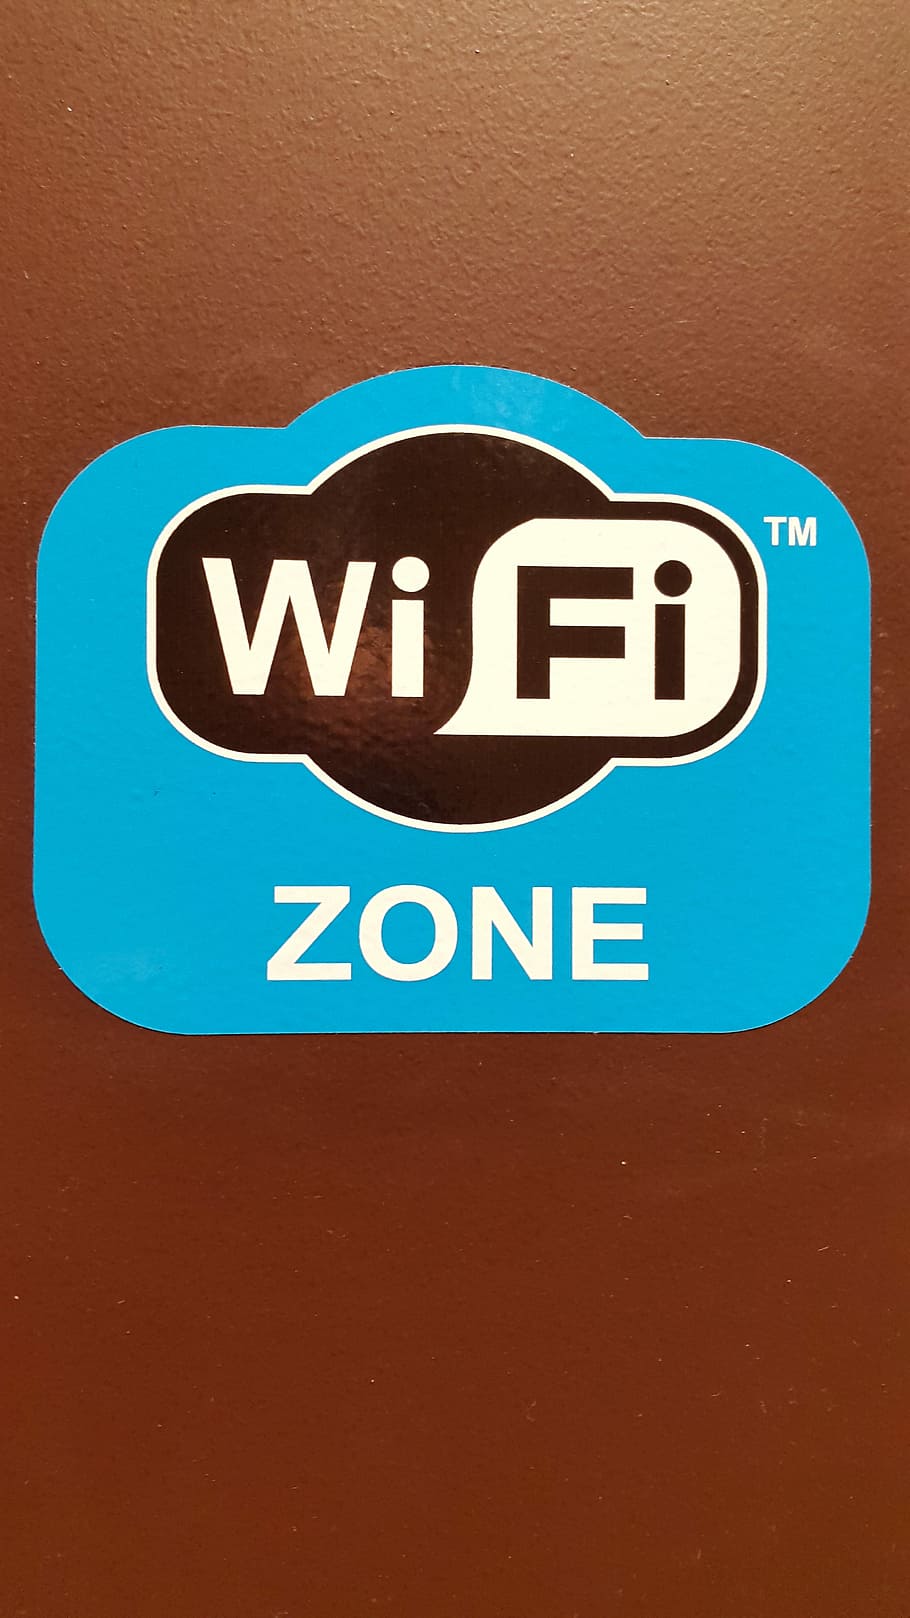 wifi zone logo, graphic, Wifi, Zone, Shield, Note, Surf, wifi, zone, street sign, board